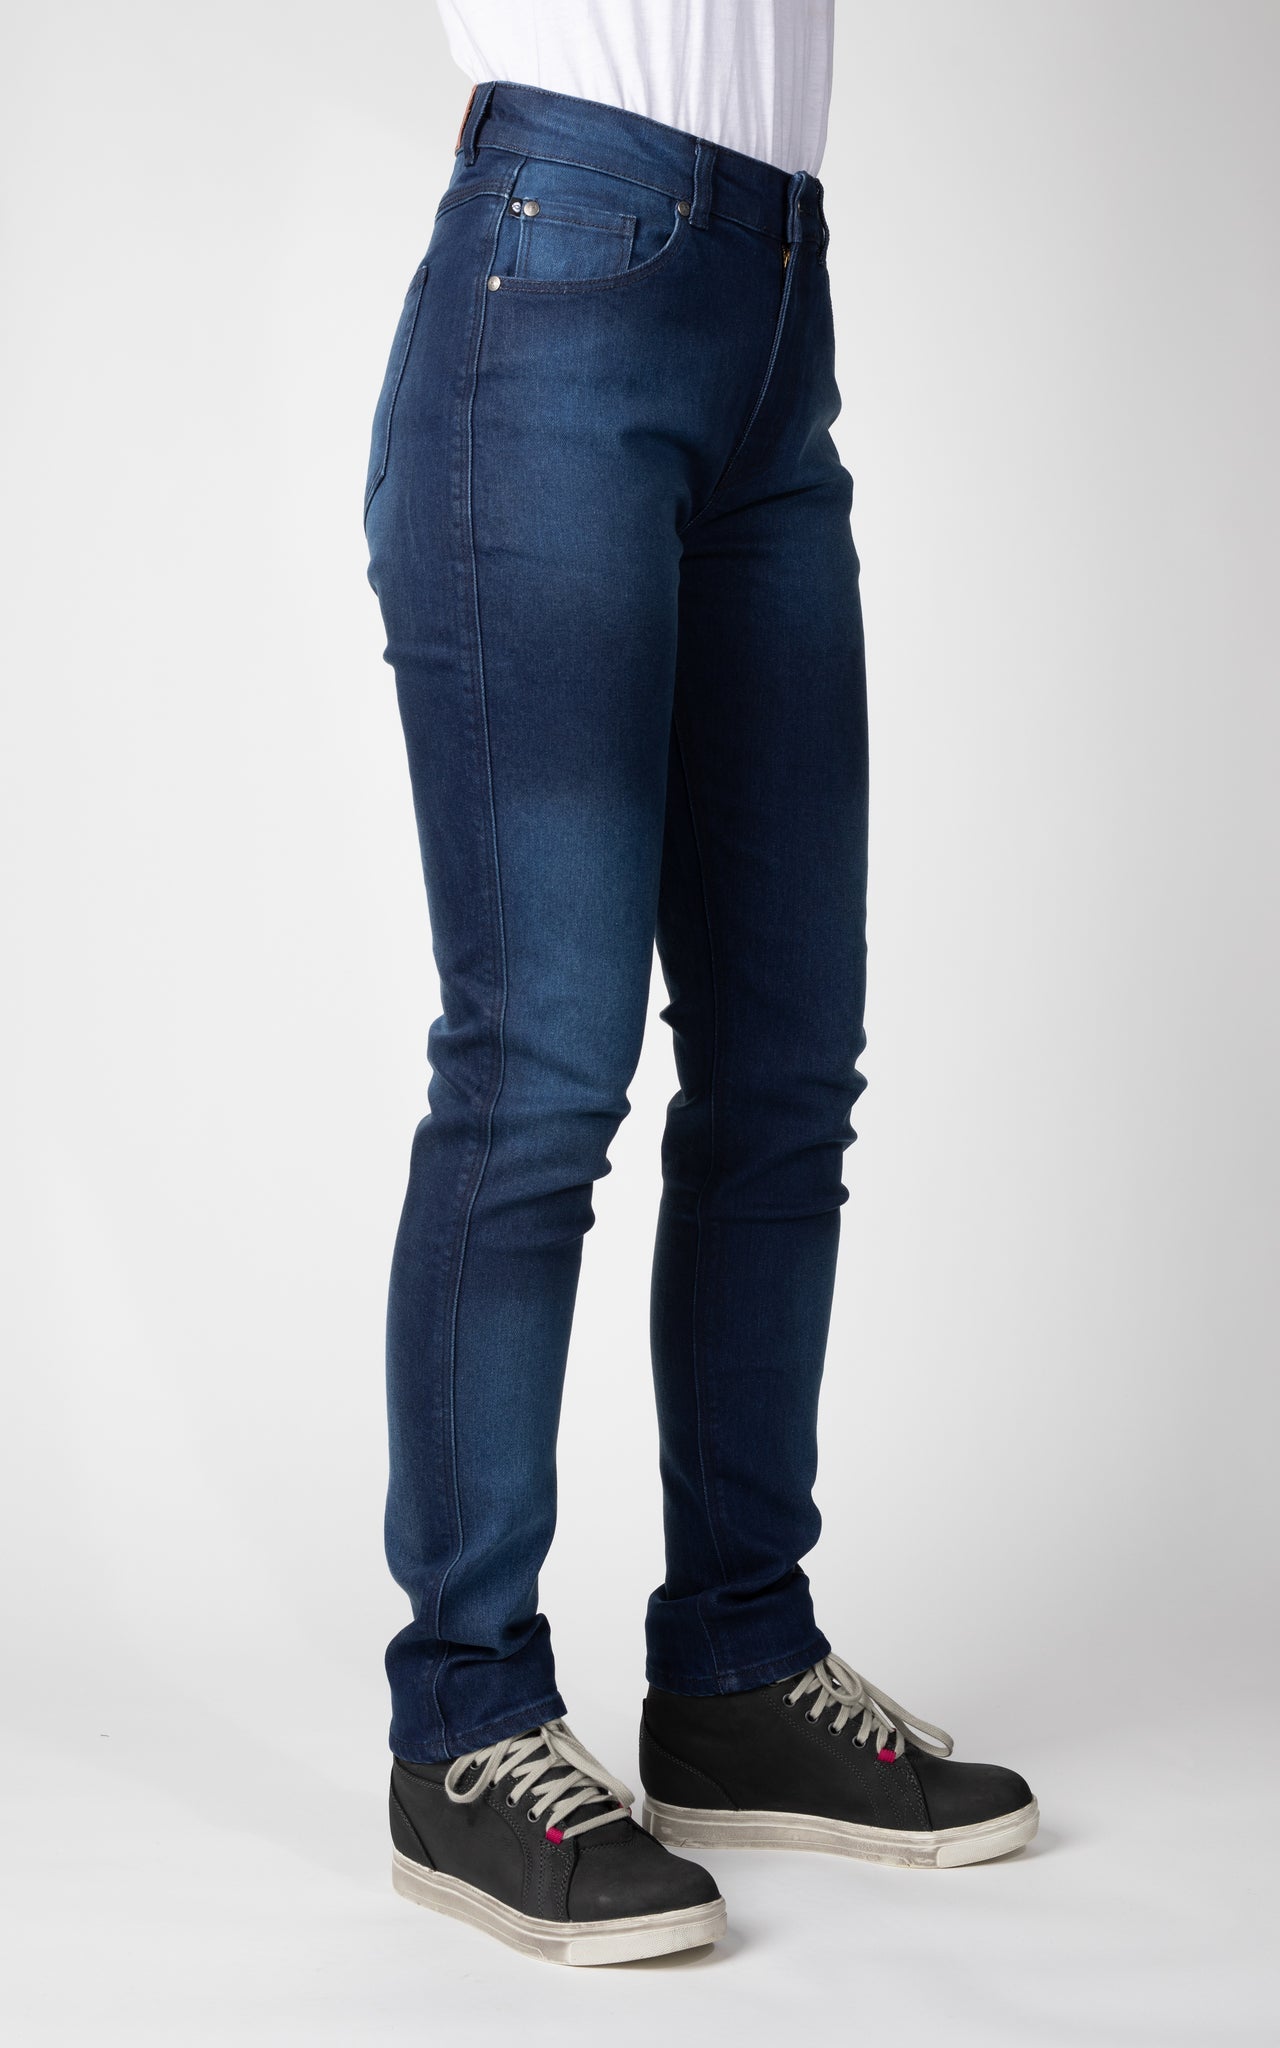 Woman&#39;s legs wearing blue lady motorcycle jeans from Bull-it